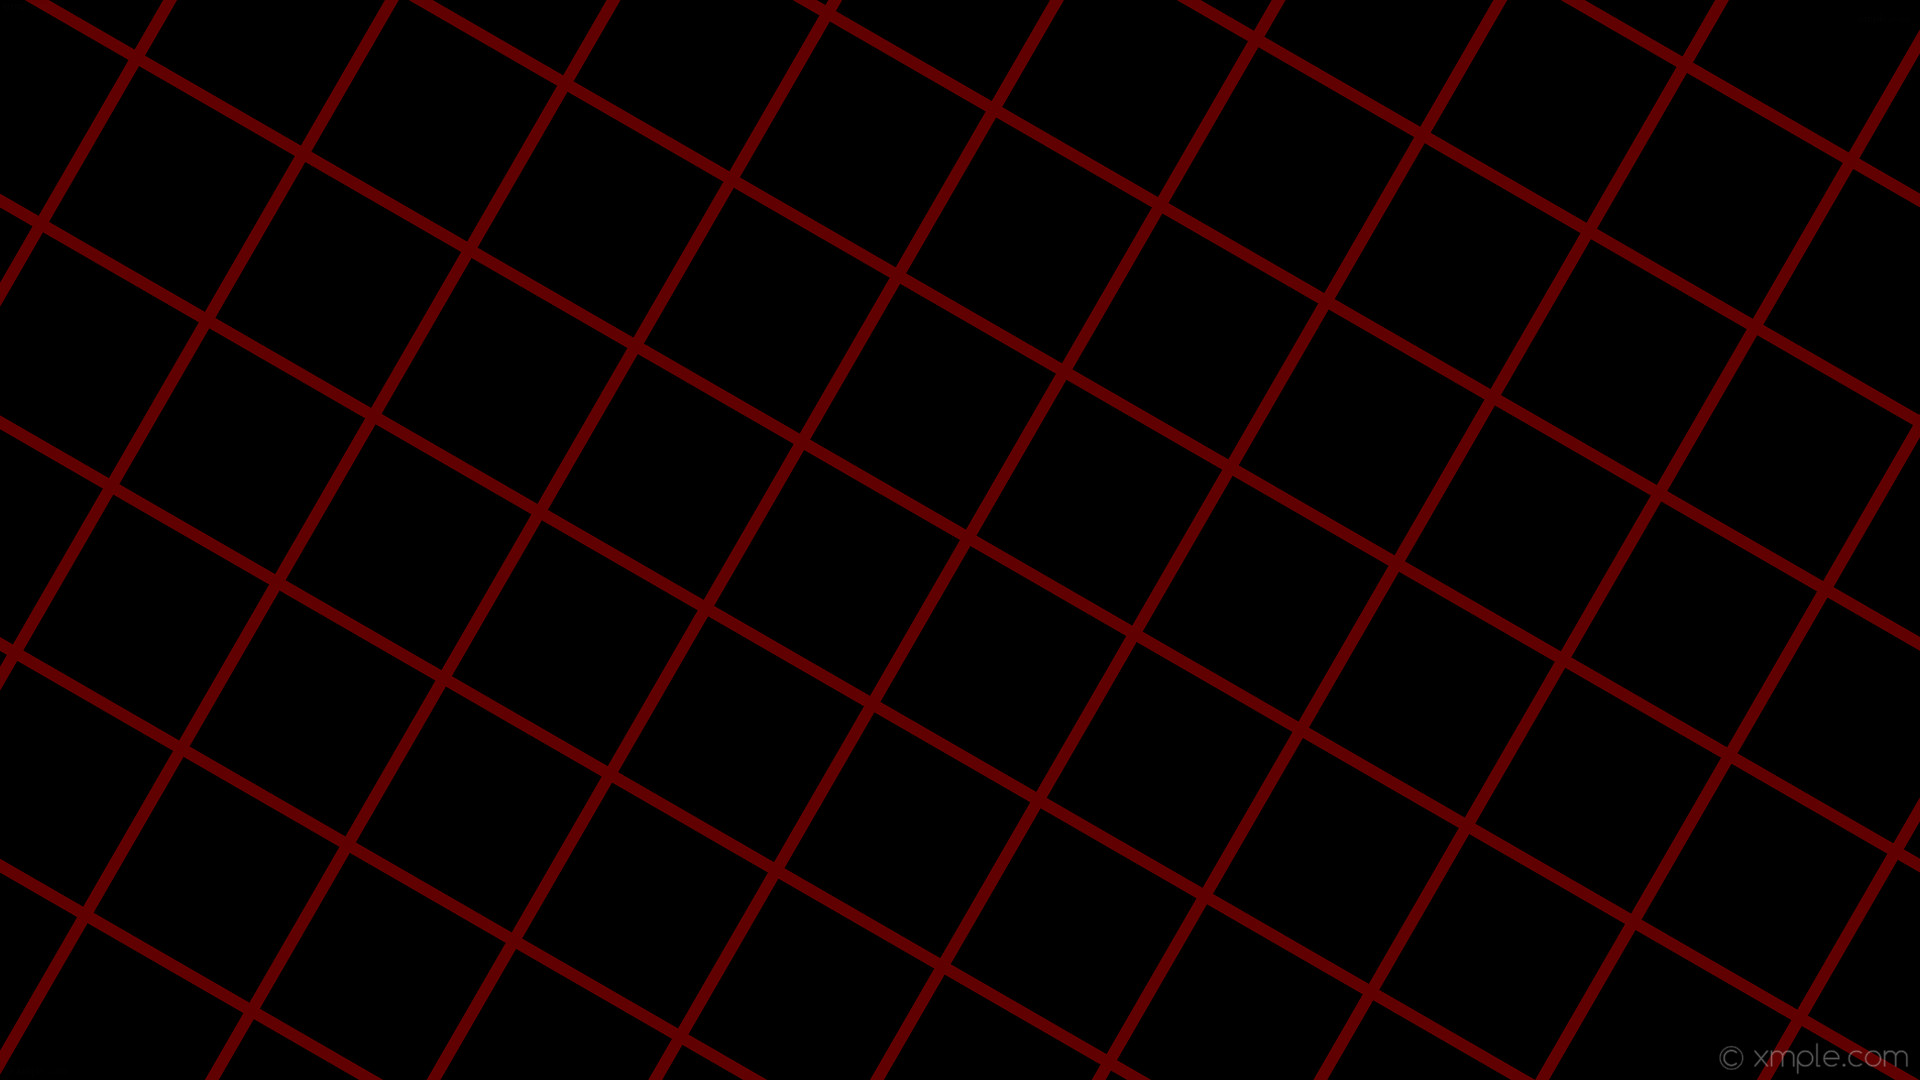 1920x1080 wallpaper graph paper red black grid dark red #000000 #8b0000 60Â° 12px 192px